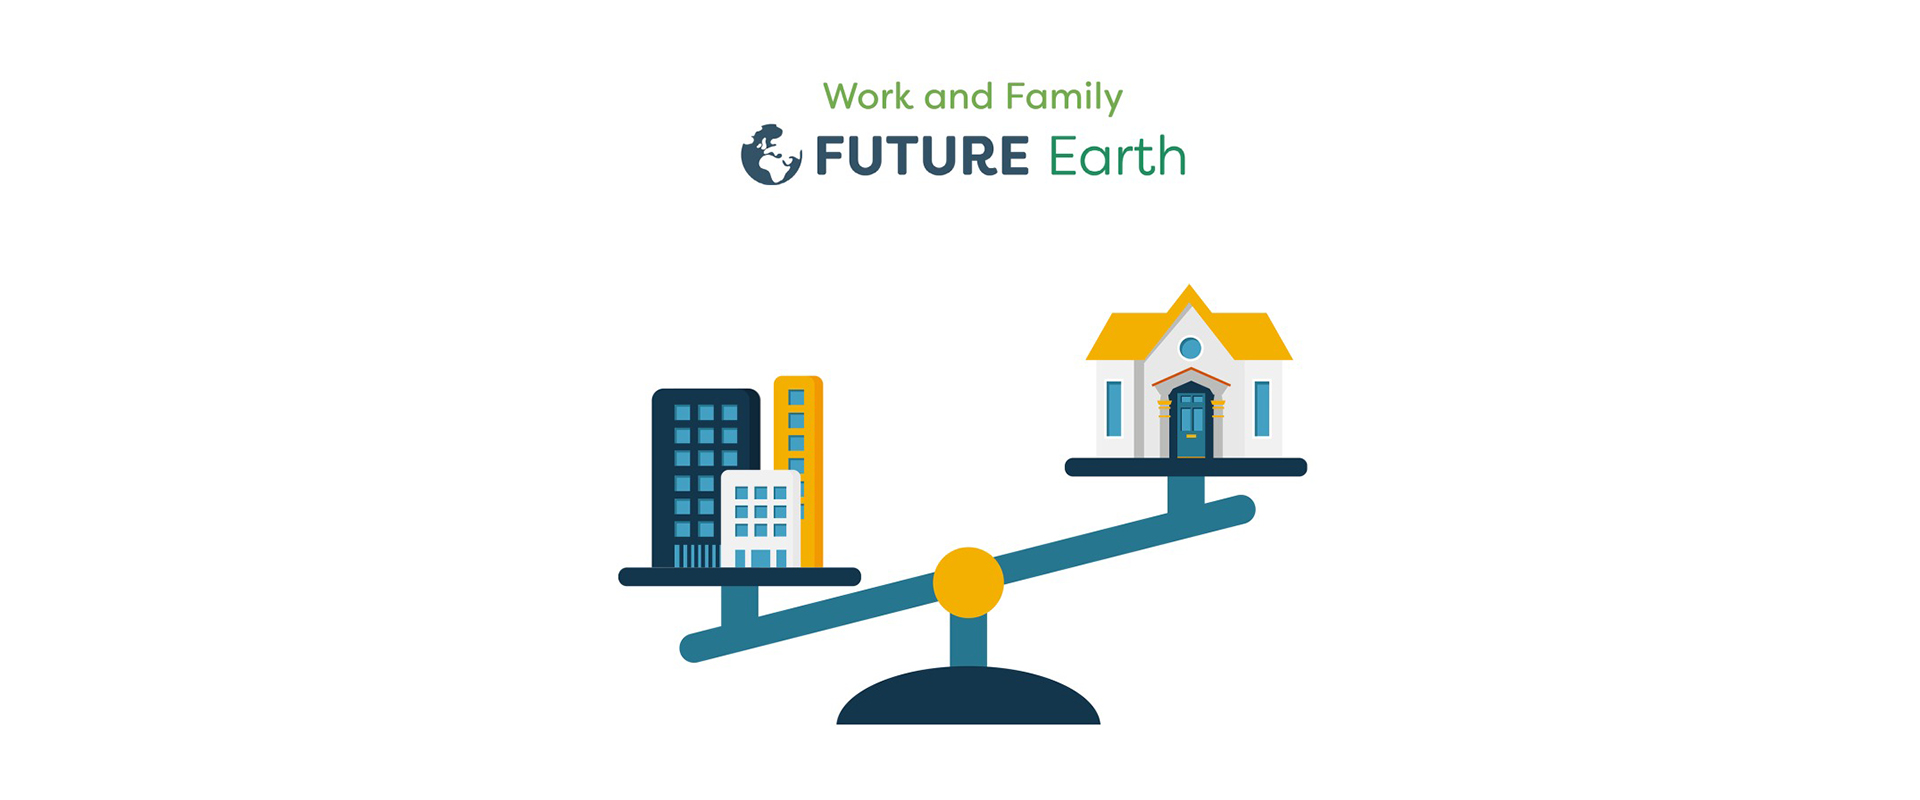 Bright Horizons Future Earth Agenda - Work and Family